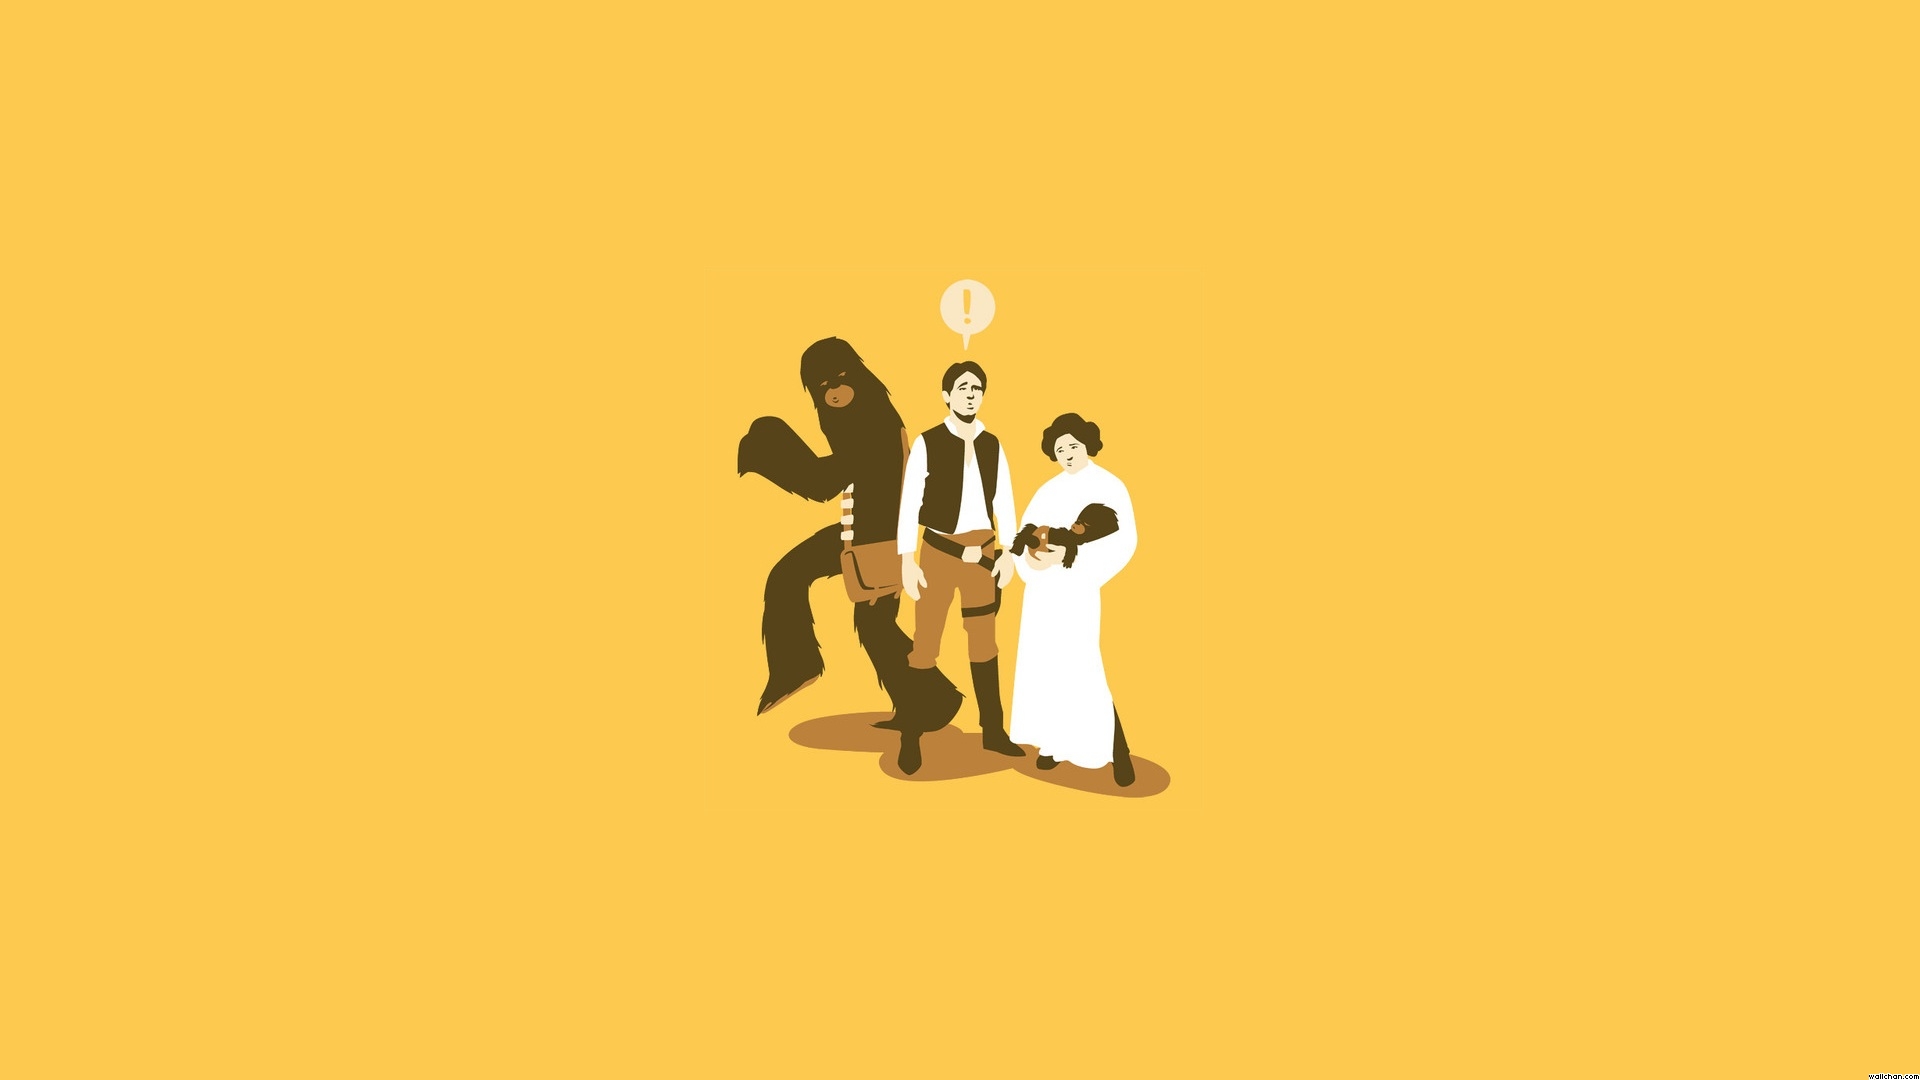 Funny Star Wars Wallpaper For